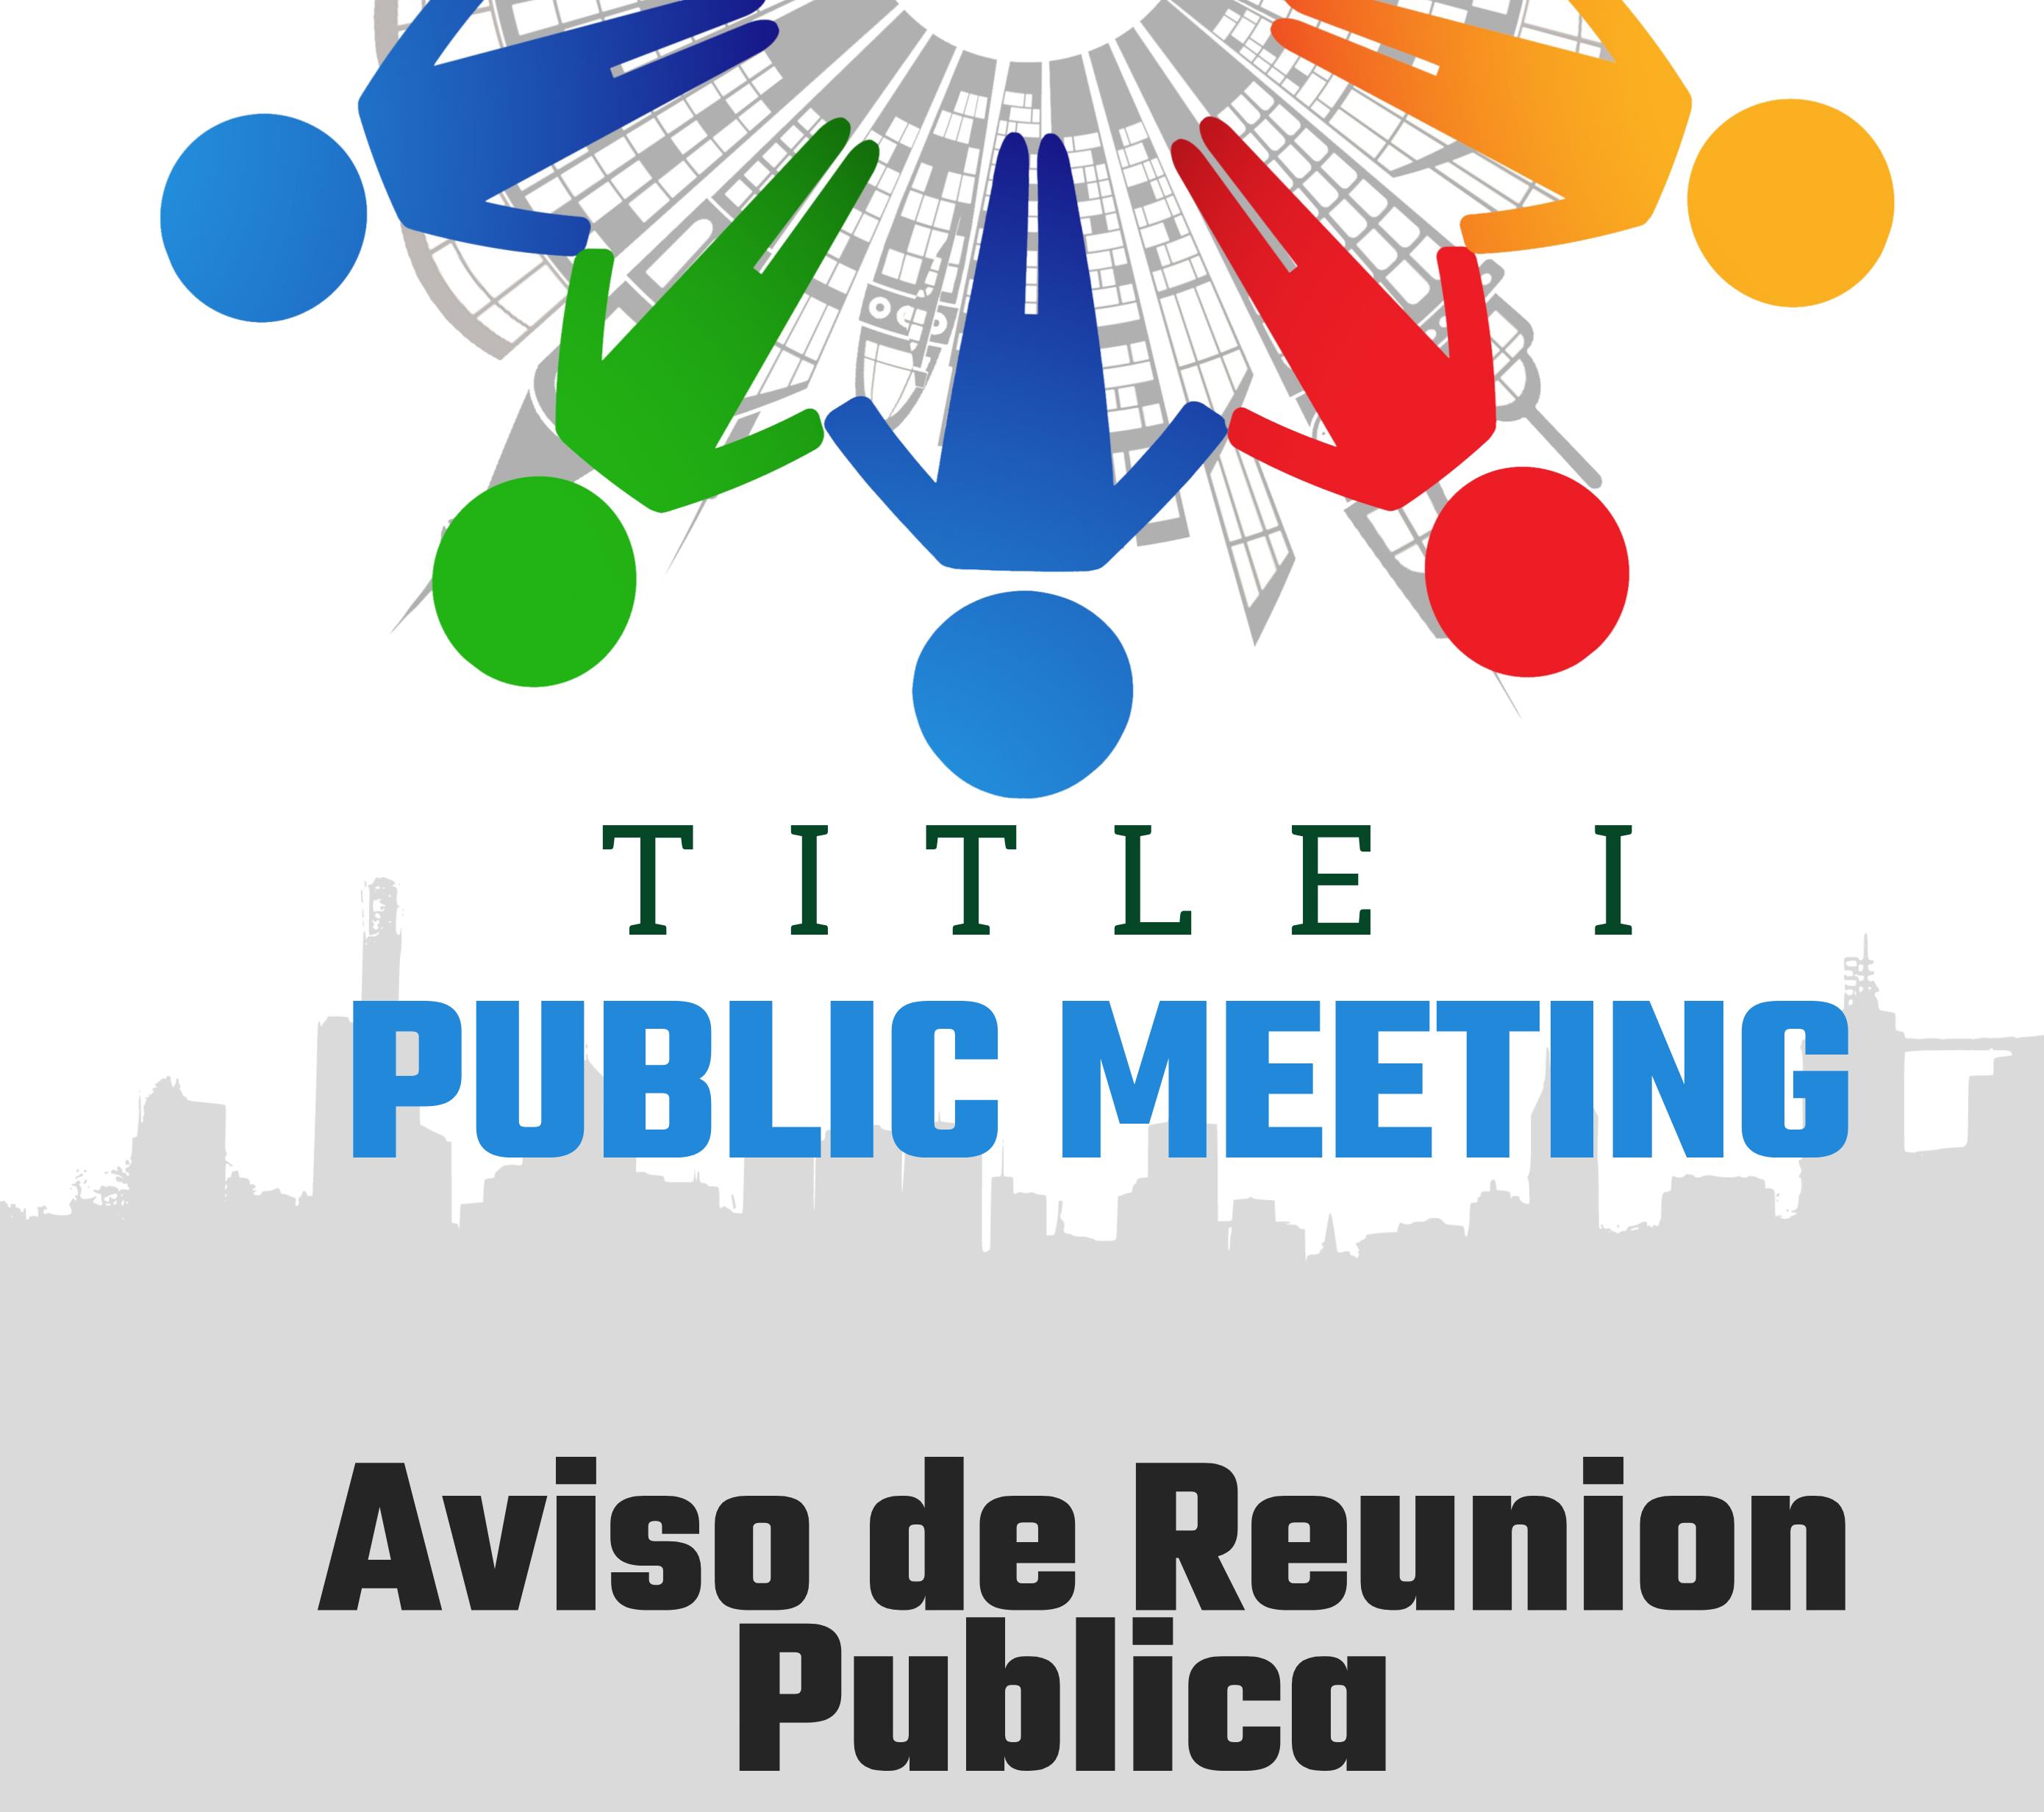 Title I Public Meeting  Aviso de reunión pública